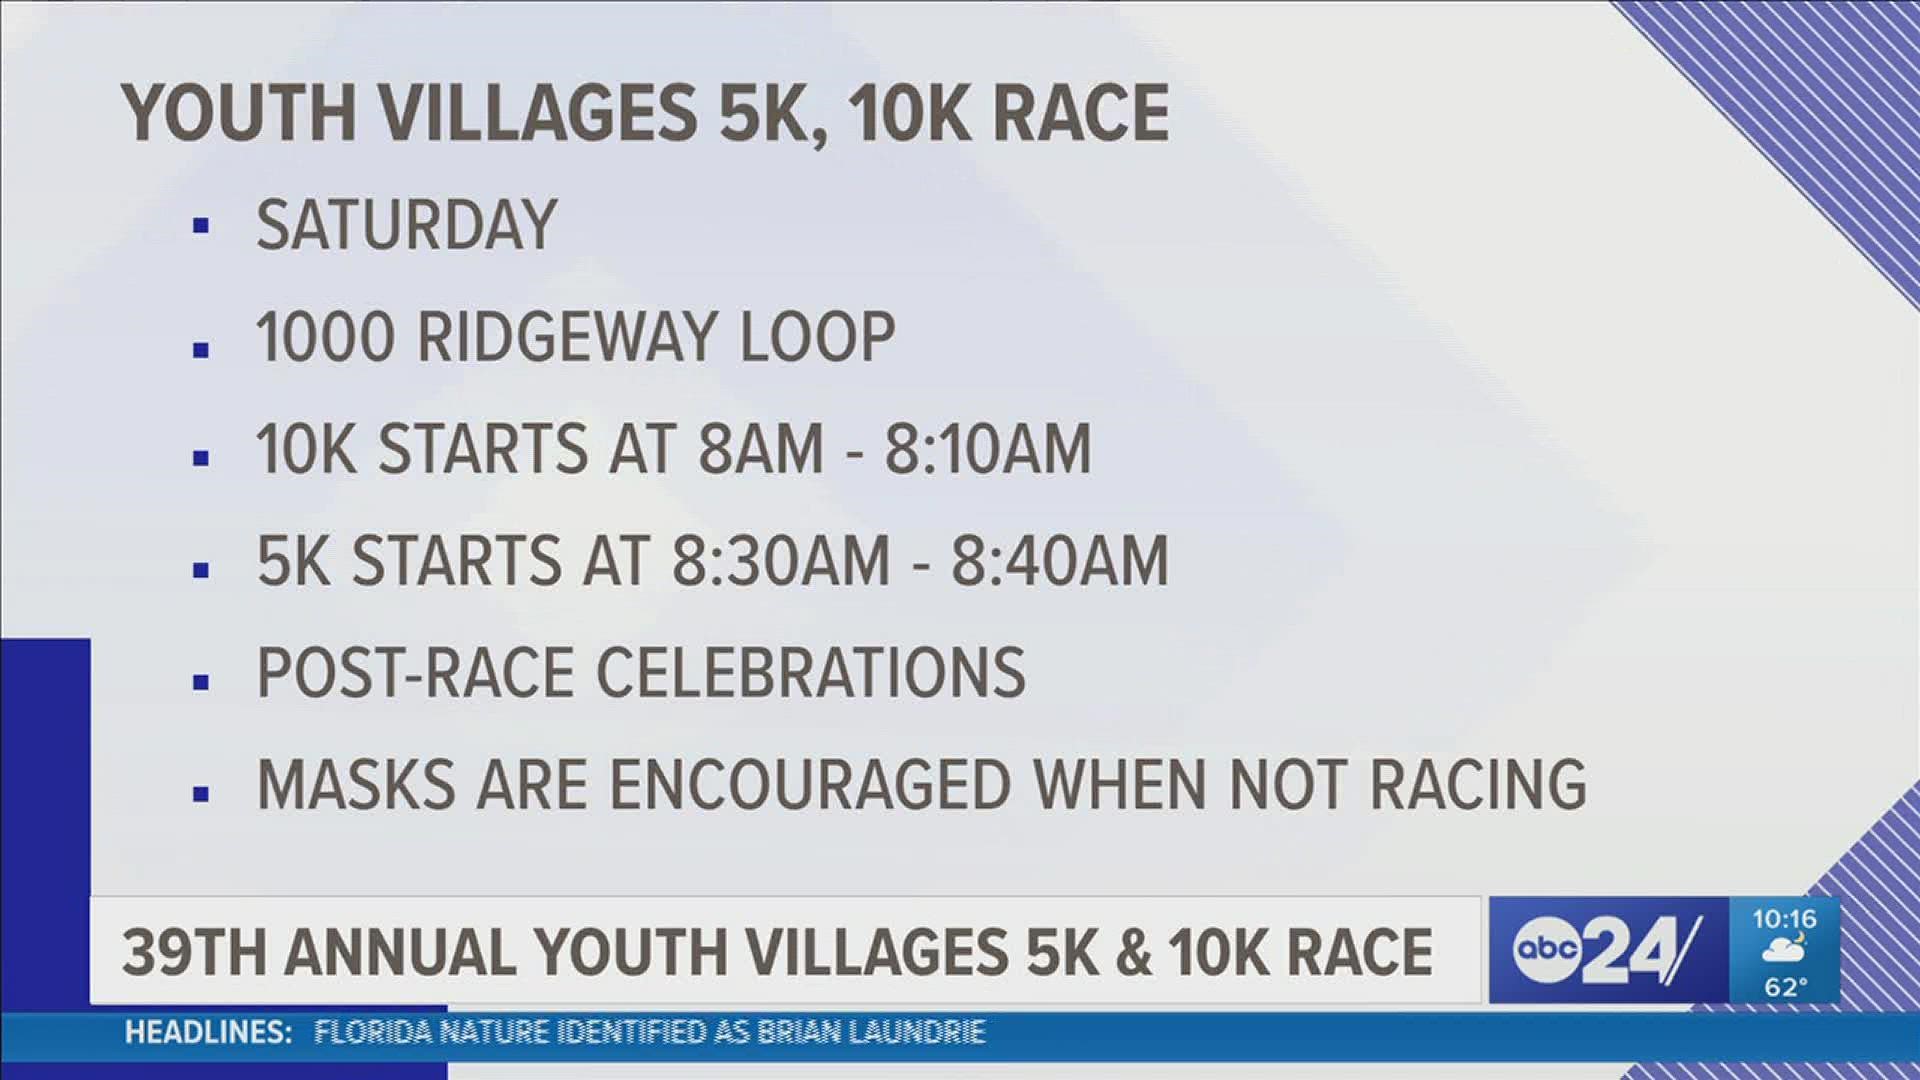 The race takes place Saturday, October 23, 2021 at 1000 Ridgeway Loop, off Poplar Avenue in Memphis.